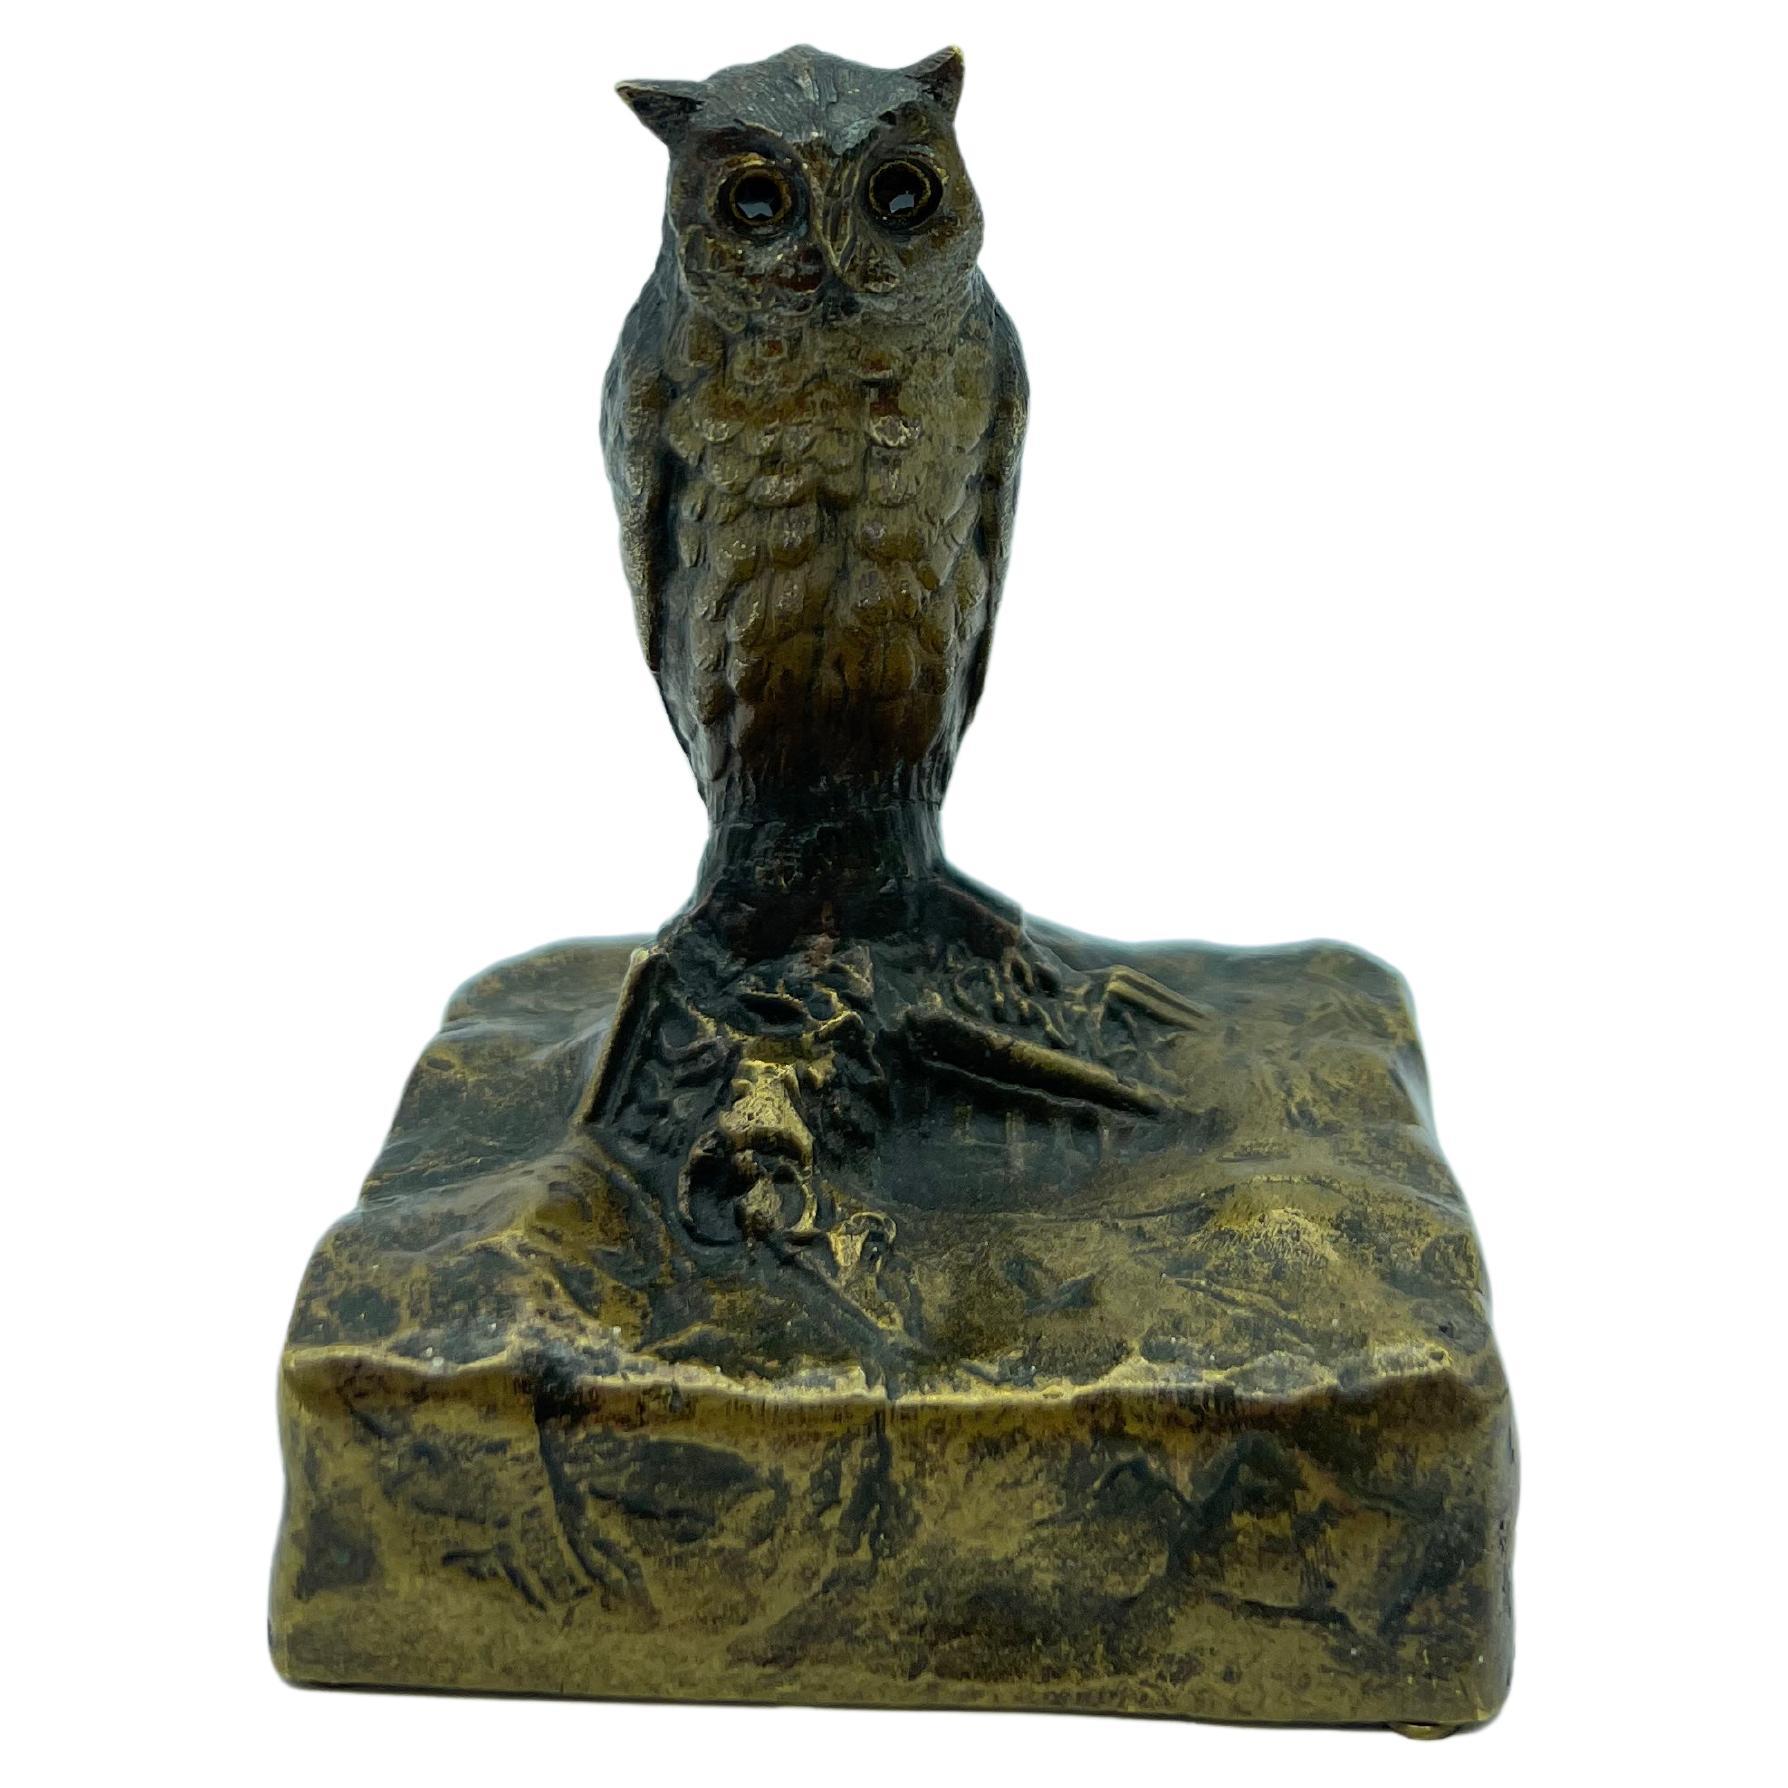 Antique Owl Sculpture - 13 For Sale on 1stDibs | antique owls